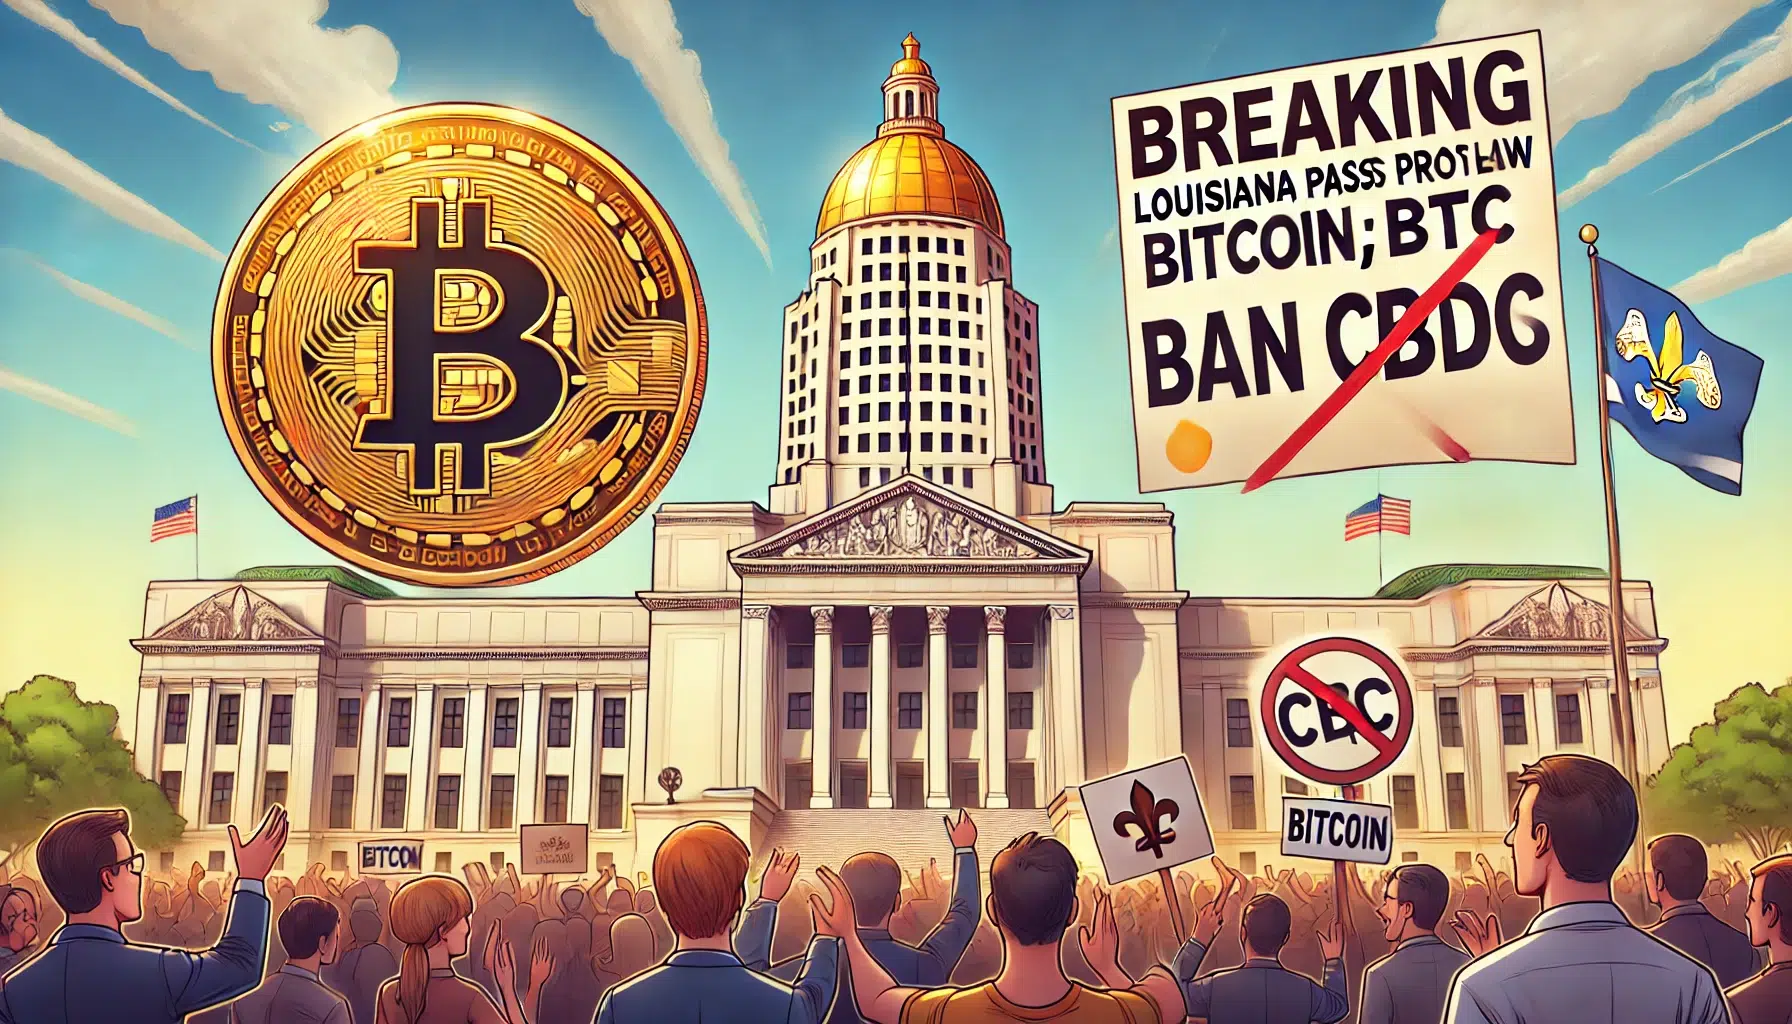 BREAKING: Louisiana Passes Law to Protect Bitcoin (BTC) and Ban CBDCs